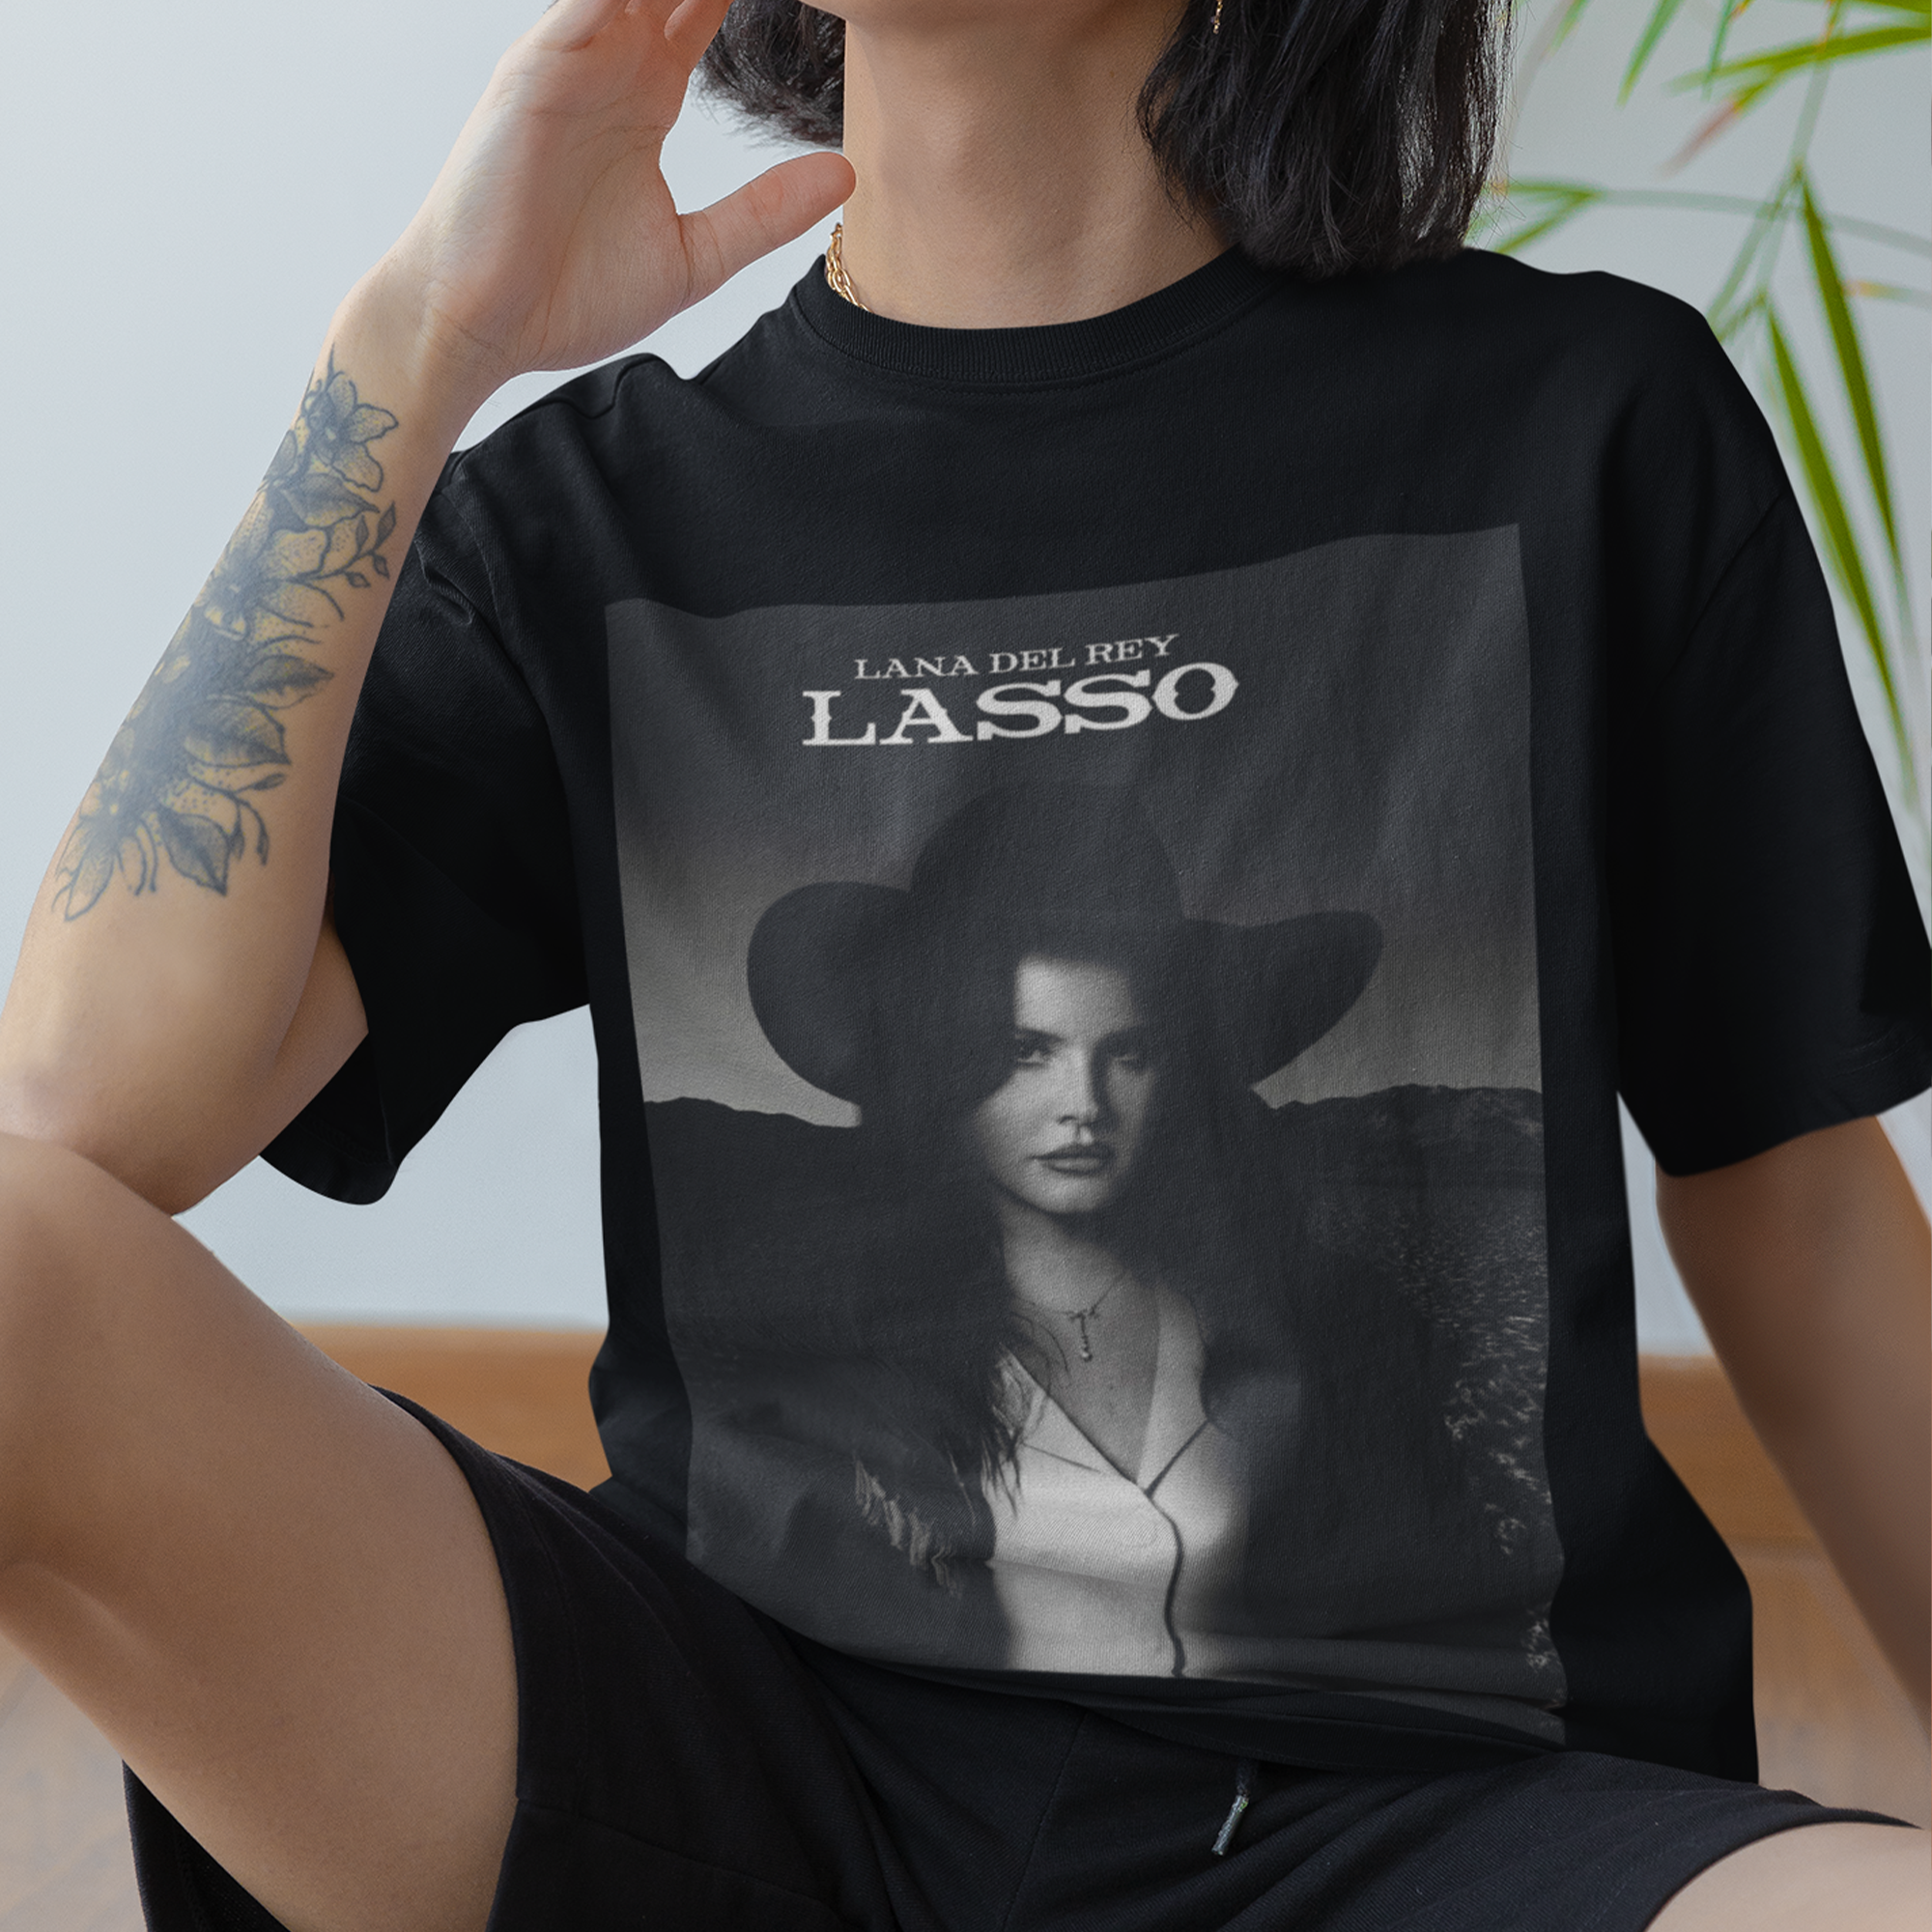 Lasso shirt, Lana del rey new album Lasso merch, lana del rey lasso shirt